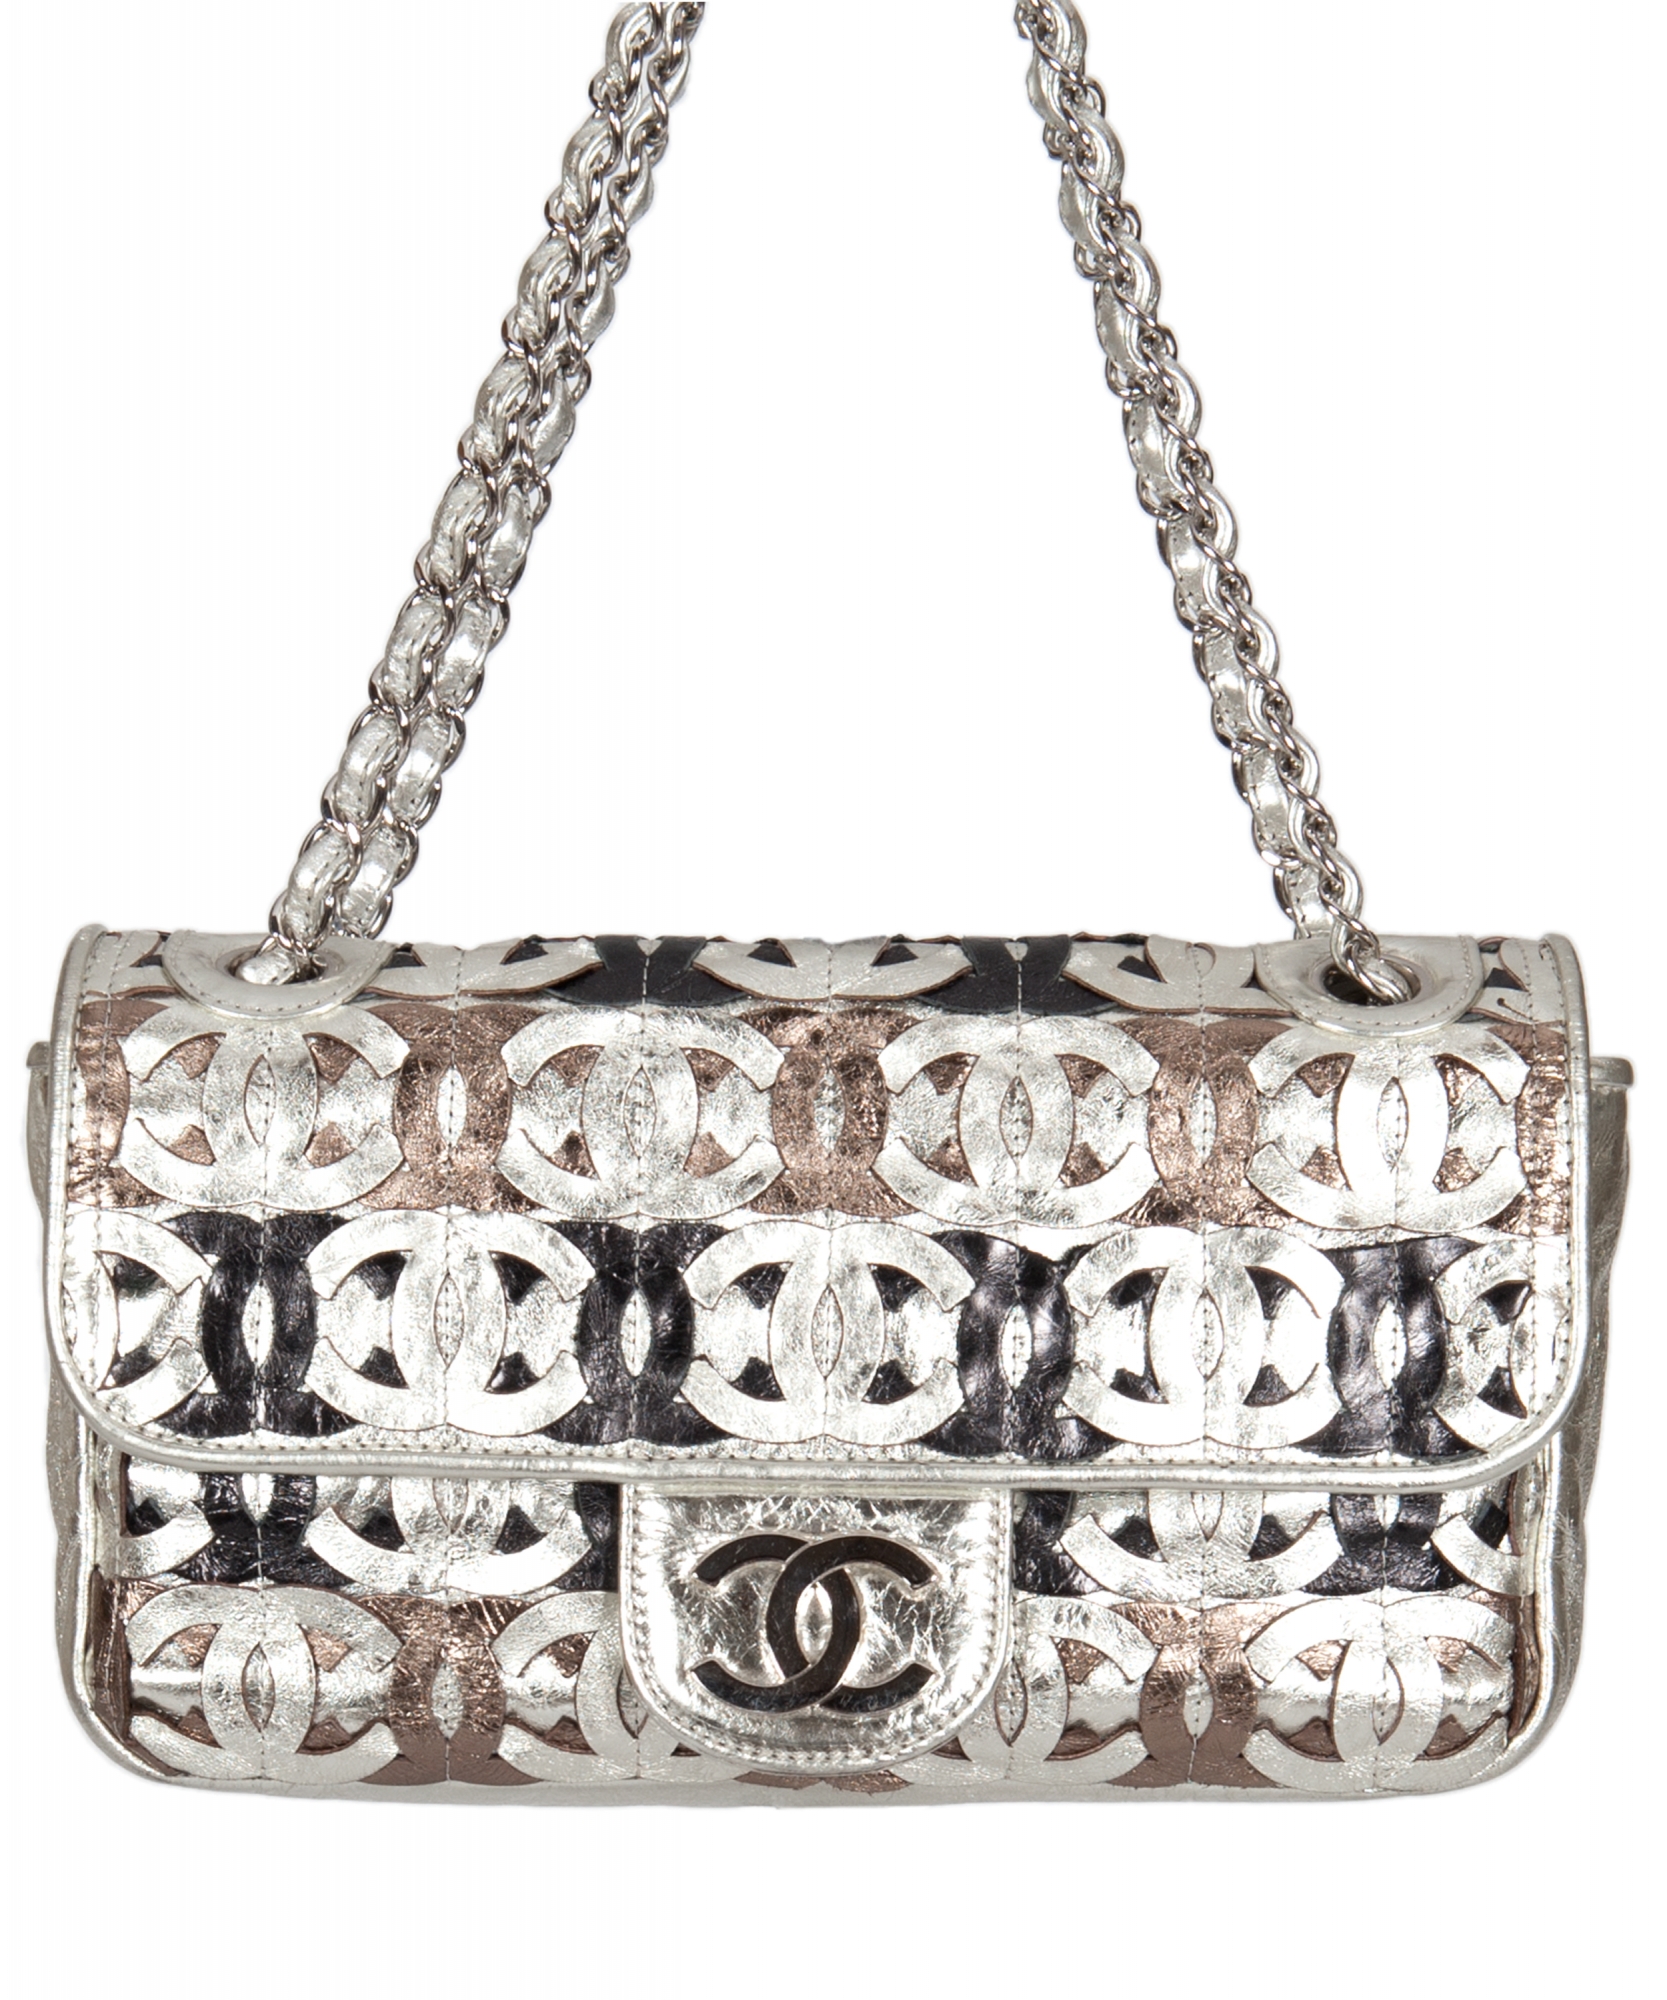 Chanel CC Cutout Metallic Flap Bag - Limited Edition - Chanel